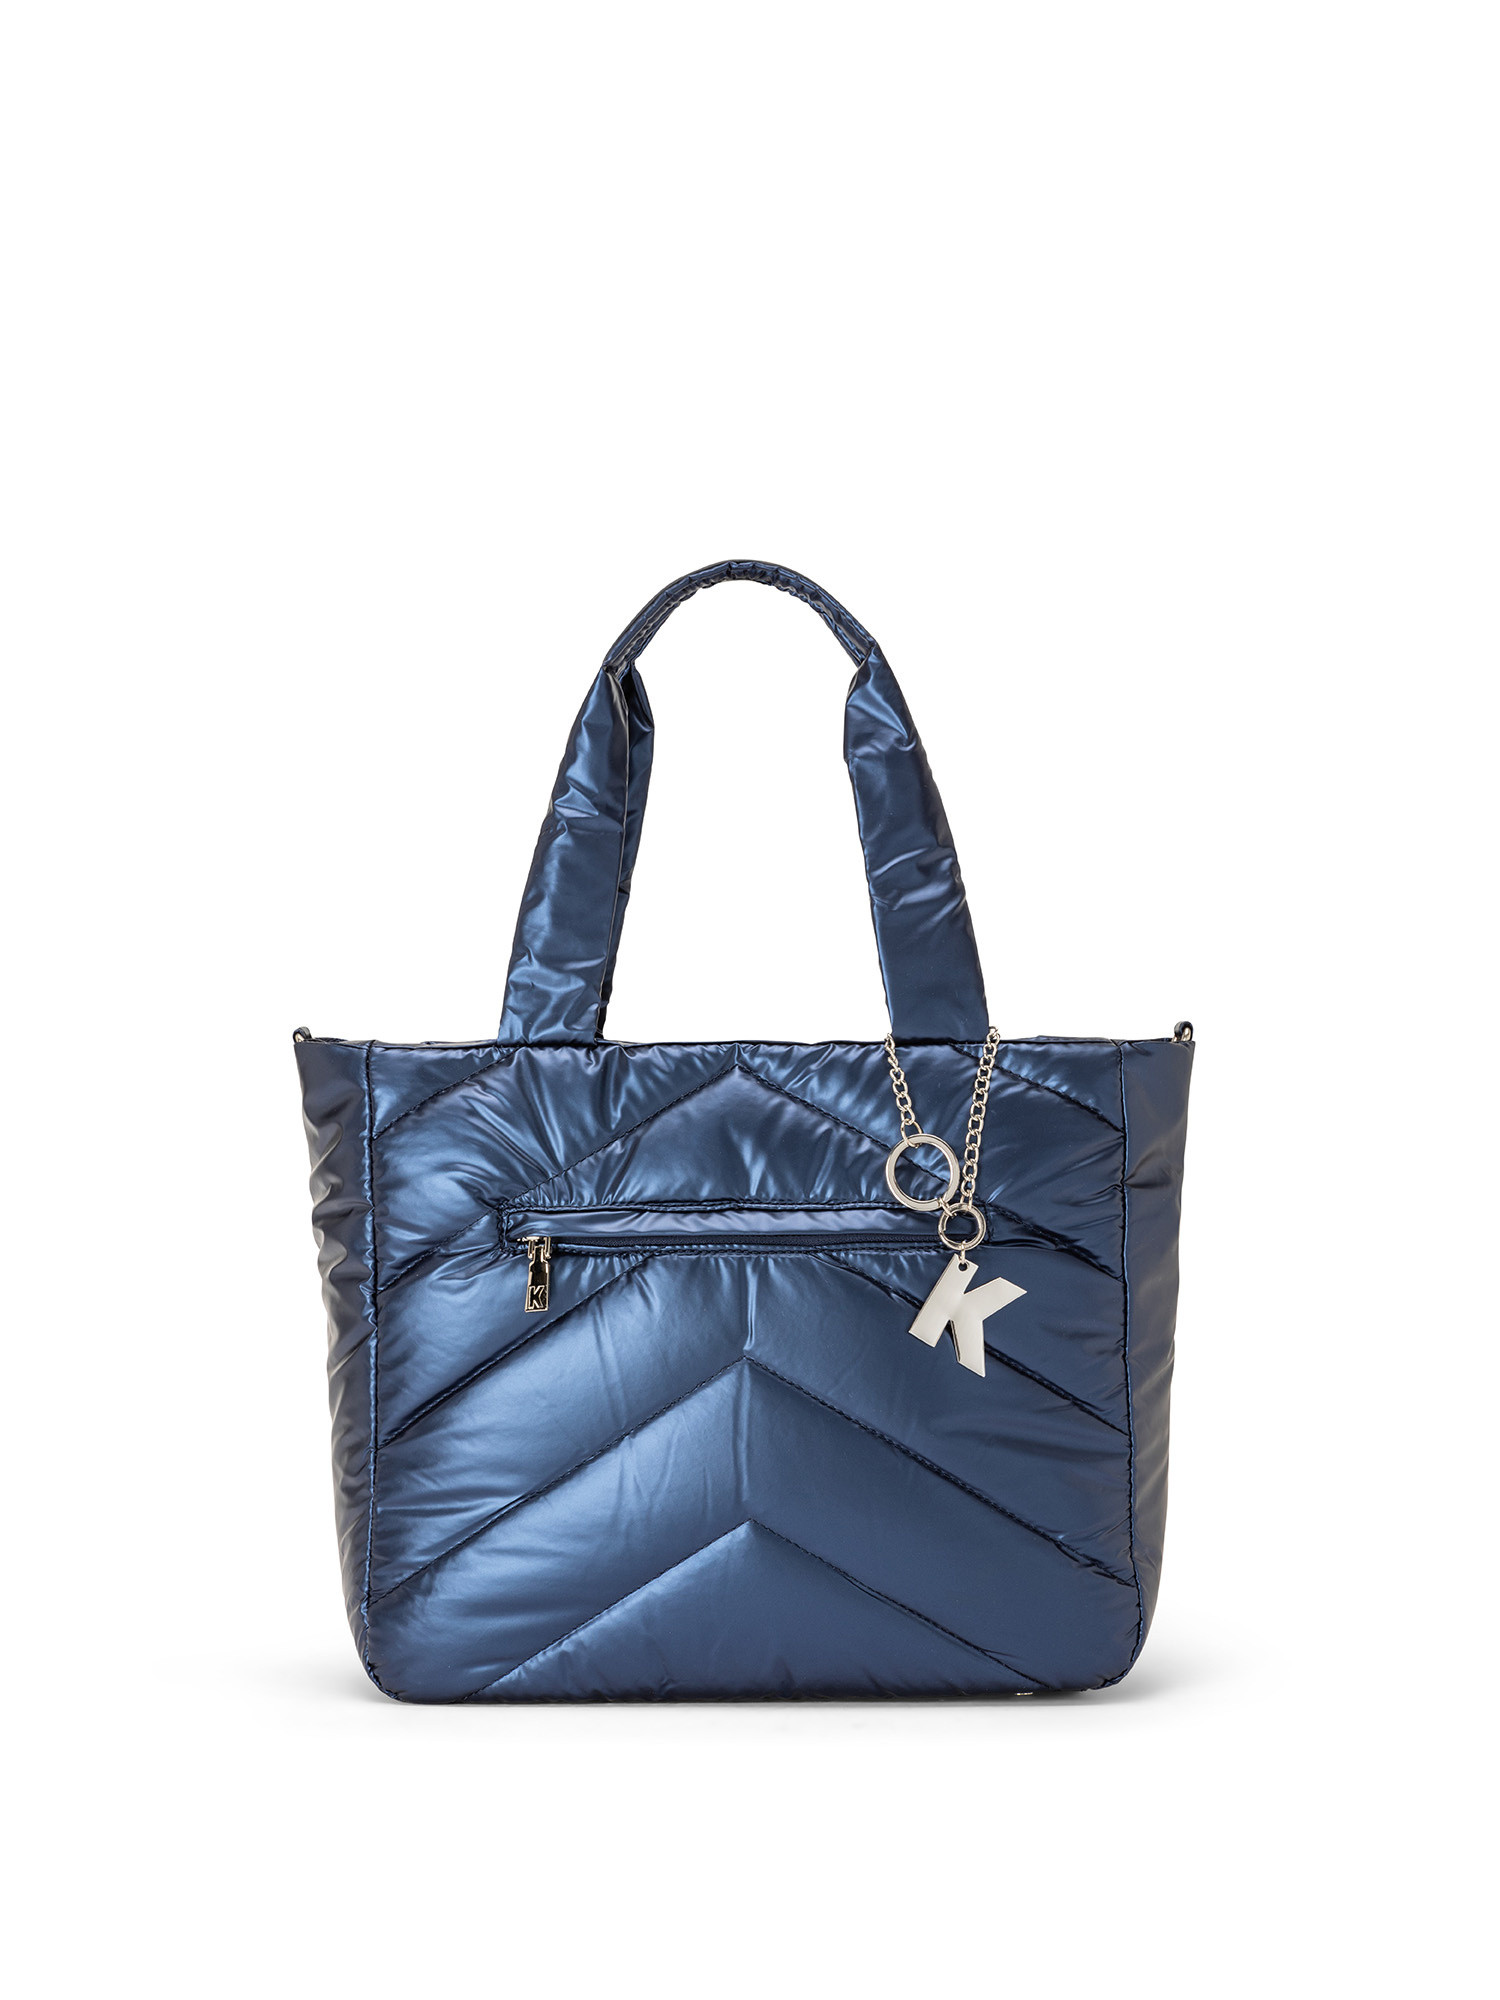 Koan - Nylon shopping bag, Blue, large image number 0